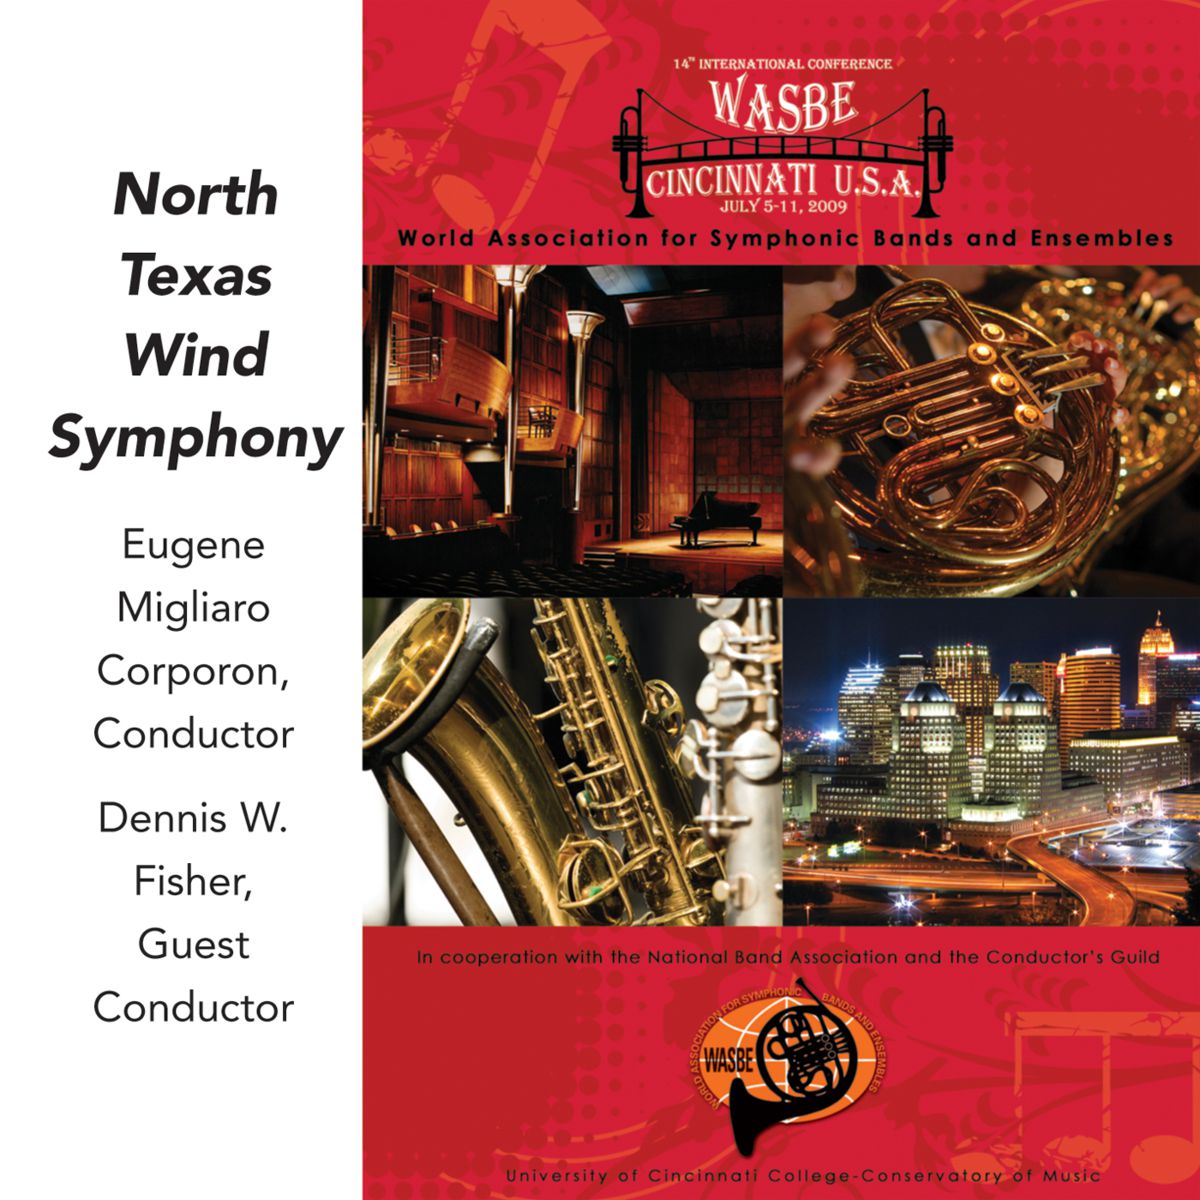 2009 WASBE Cincinnati, USA: North Texas Wind Symphony - clicca qui